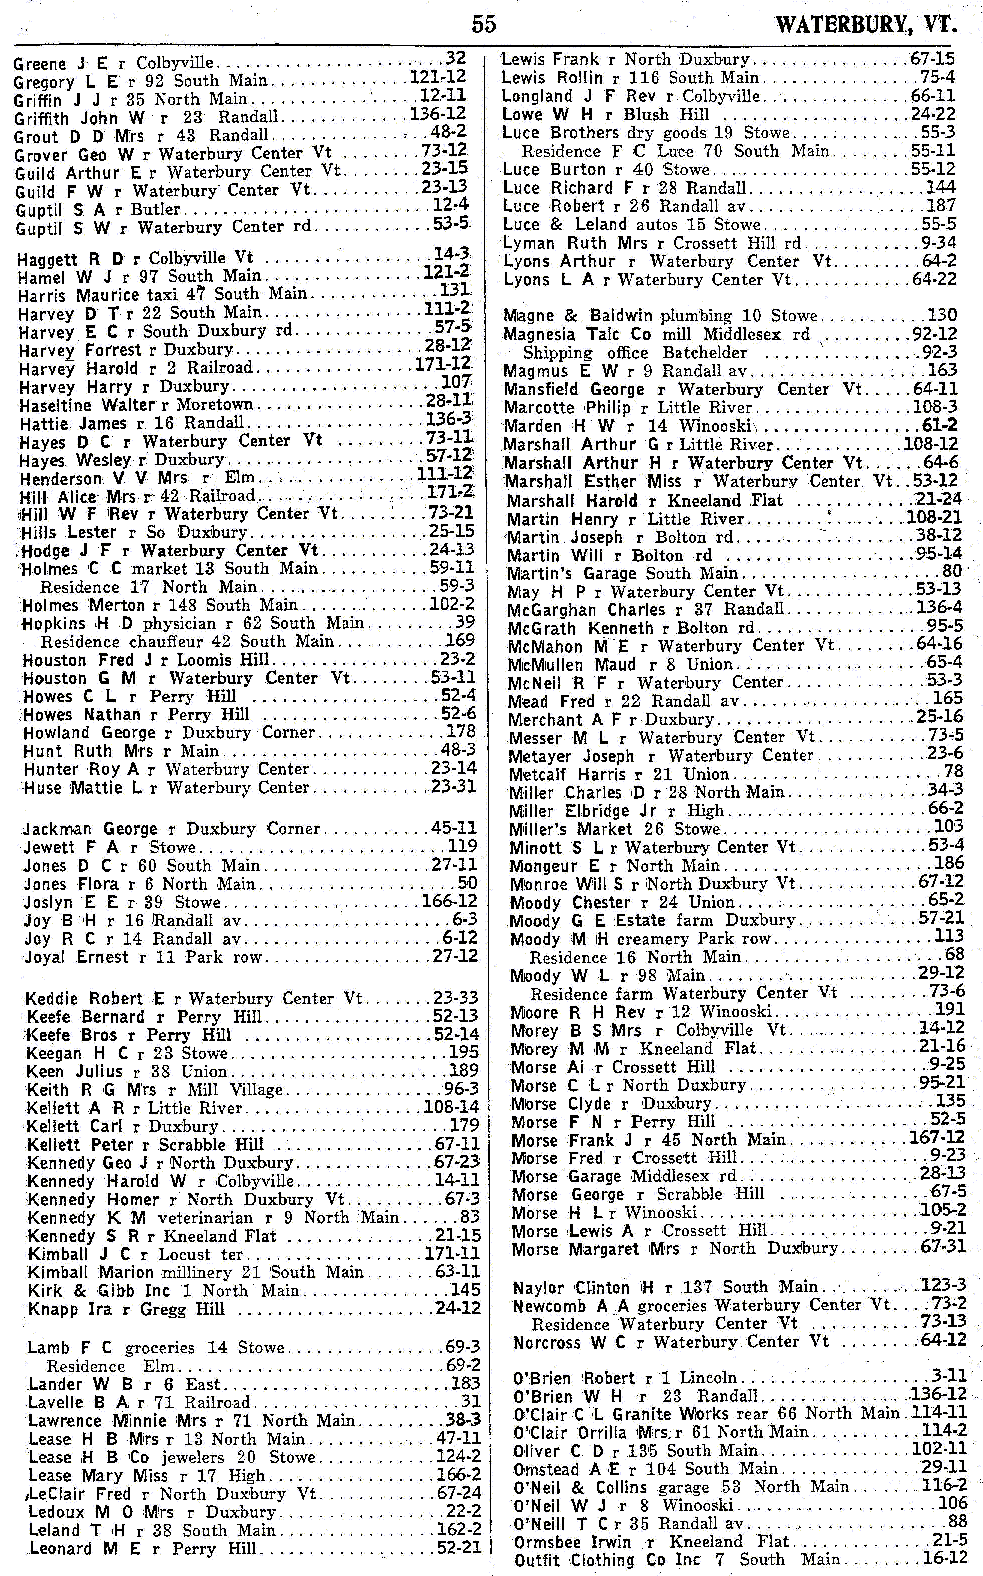 1928 Waterbury Vt Telephone Book - Page 55